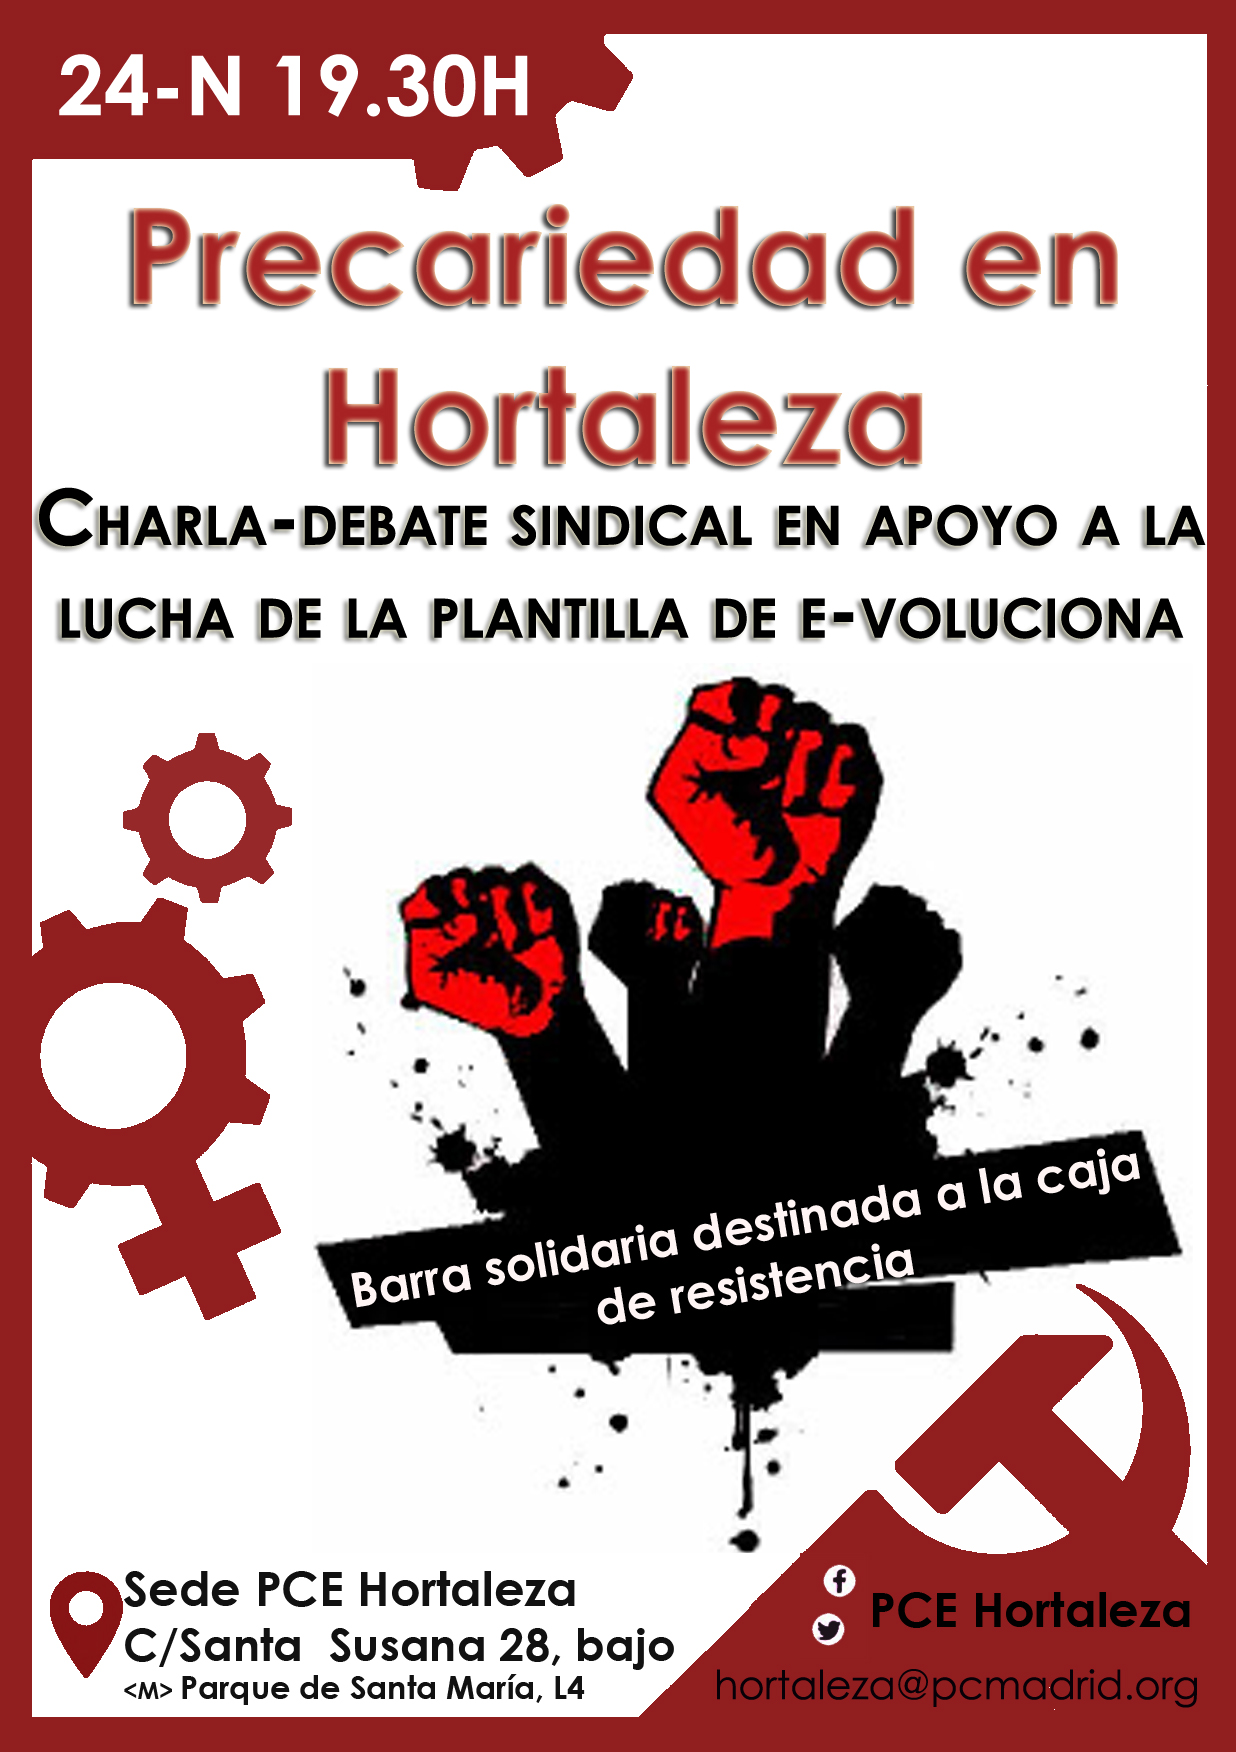 Acto en Hortaleza en apoyo a la plantilla de E-voluciona